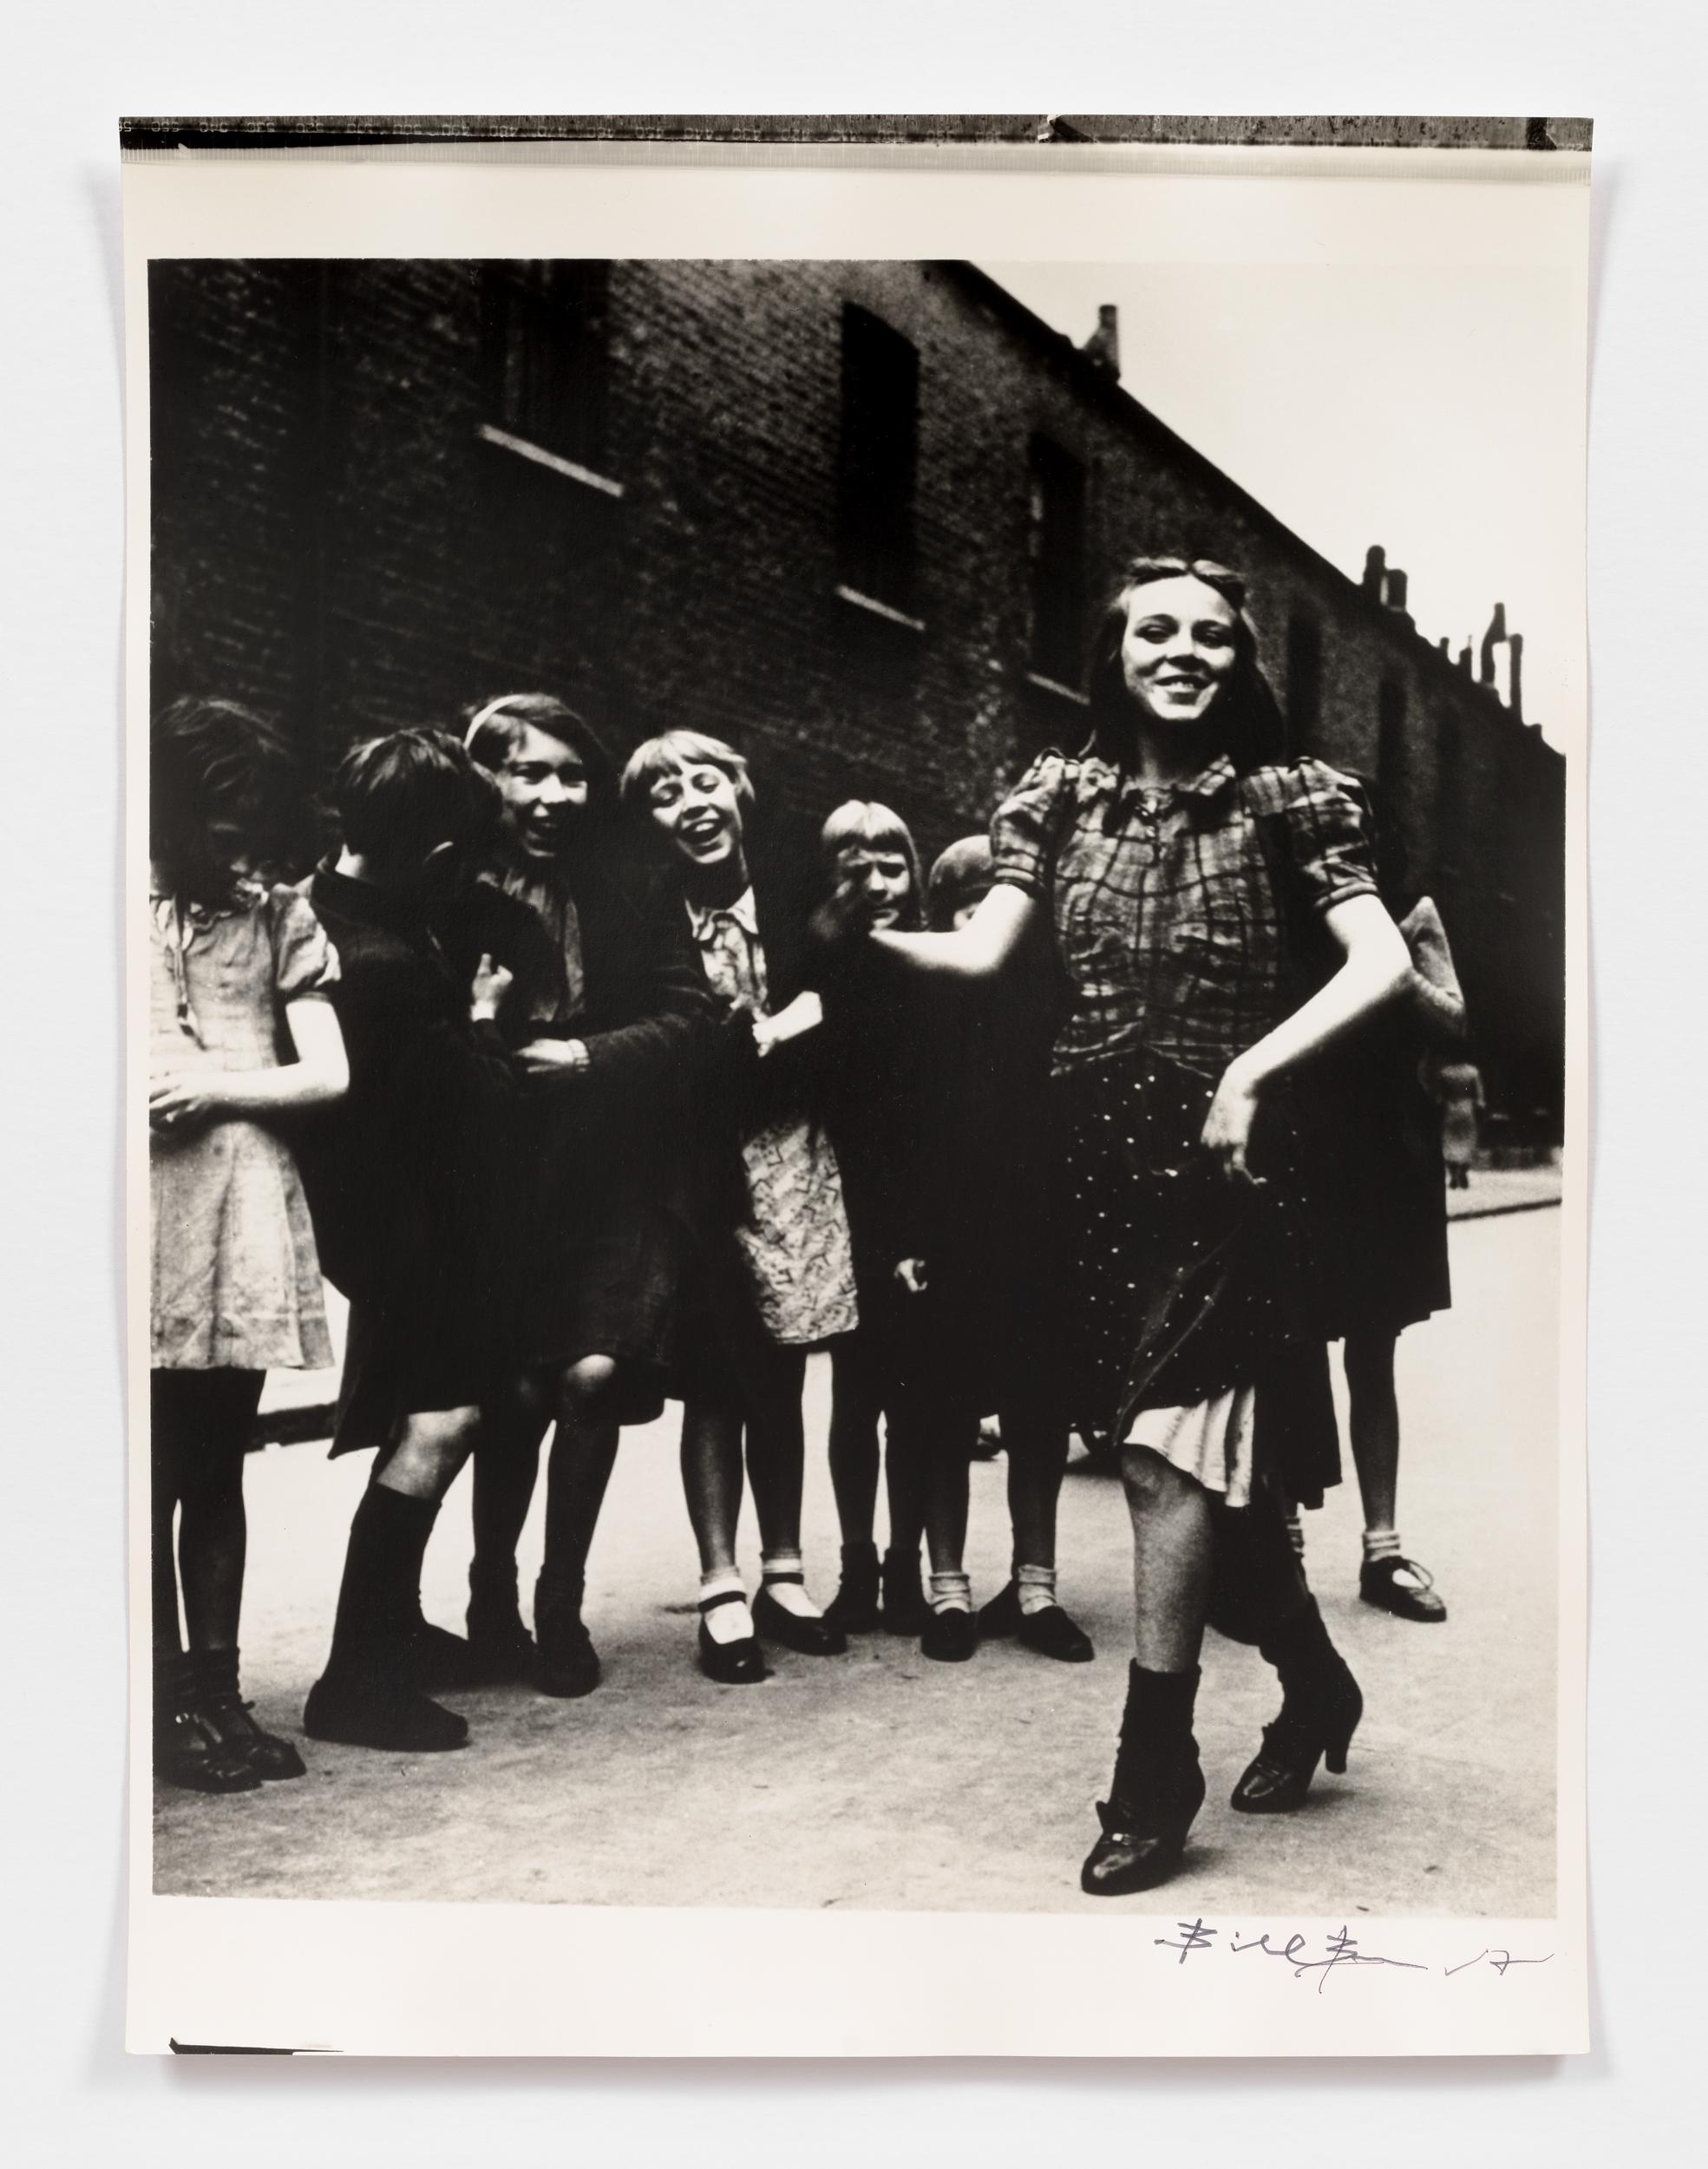 East End Girl dancing the Lambeth Walk - Photograph by Bill Brandt